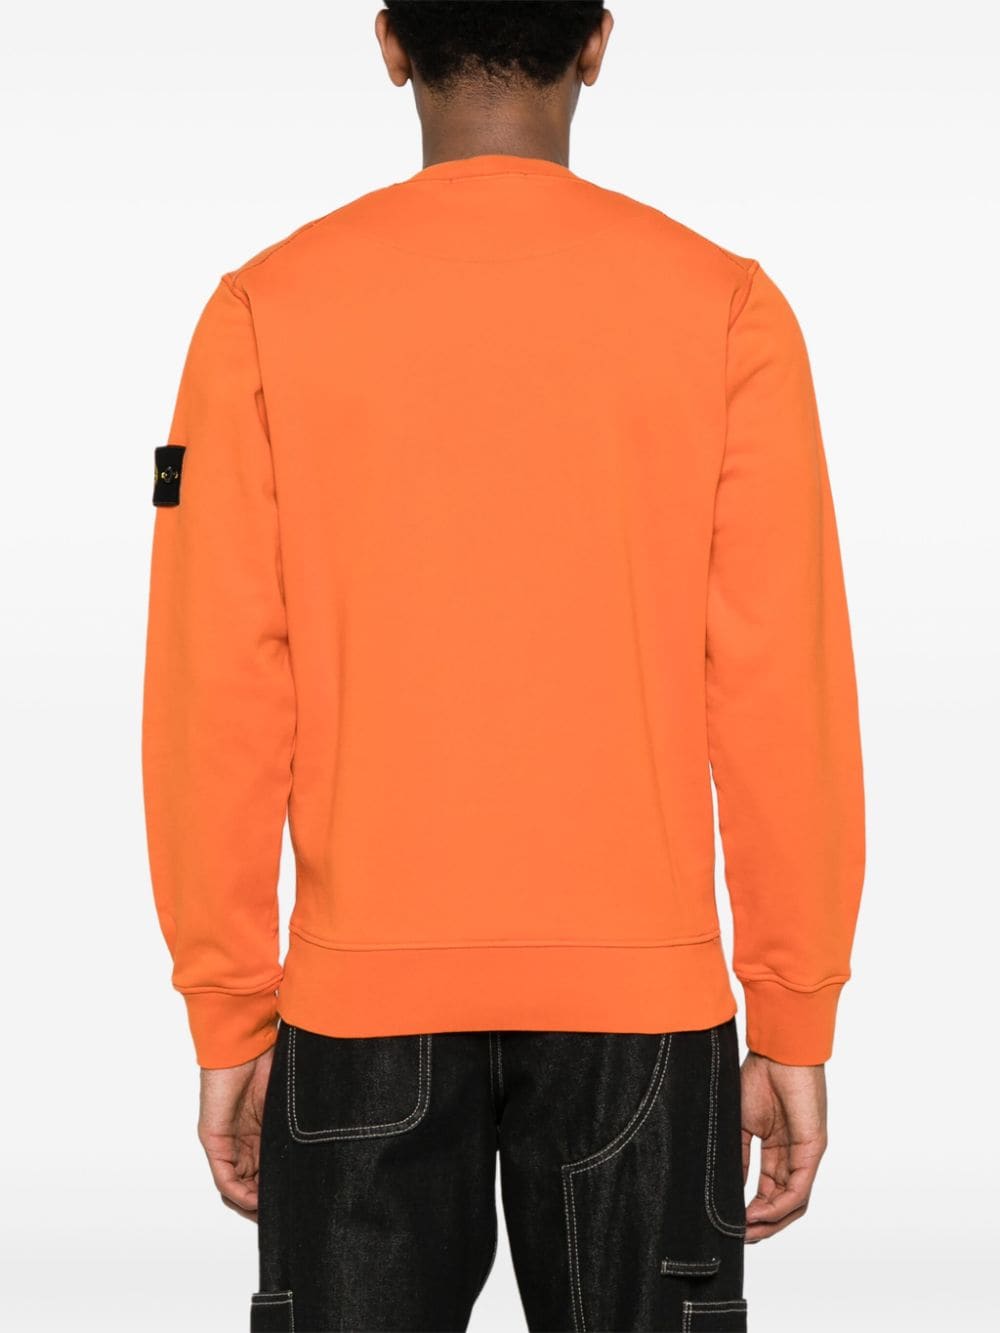 Orange Compass cotton sweatshirt